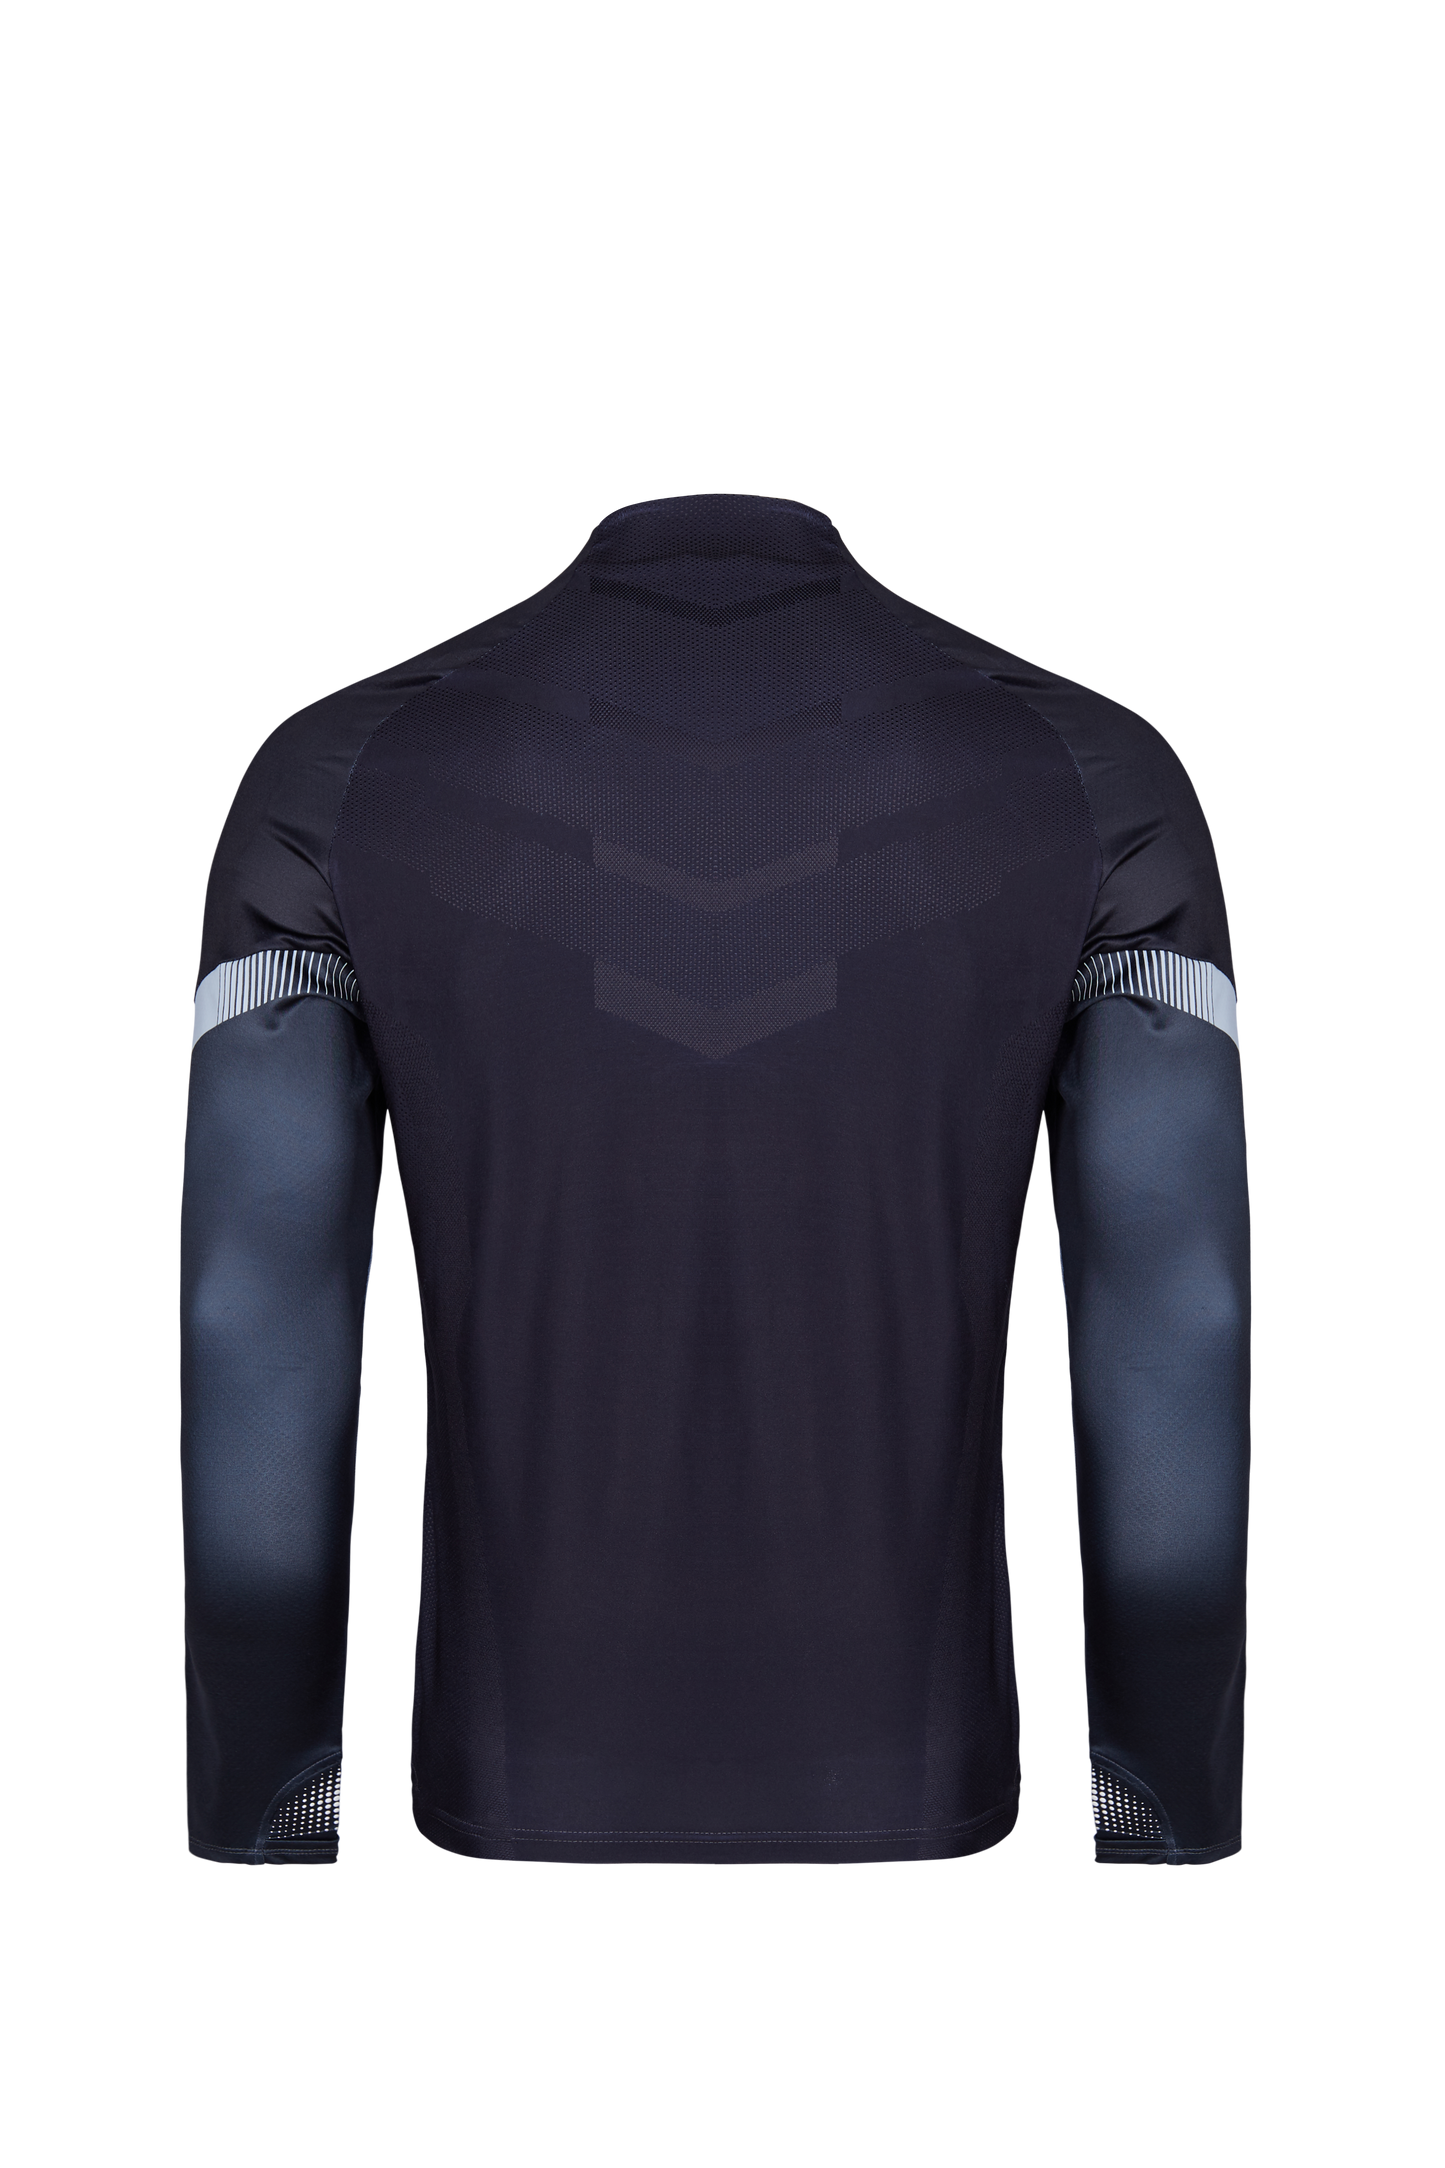 Warrior Sweatshirt- Black/Grey